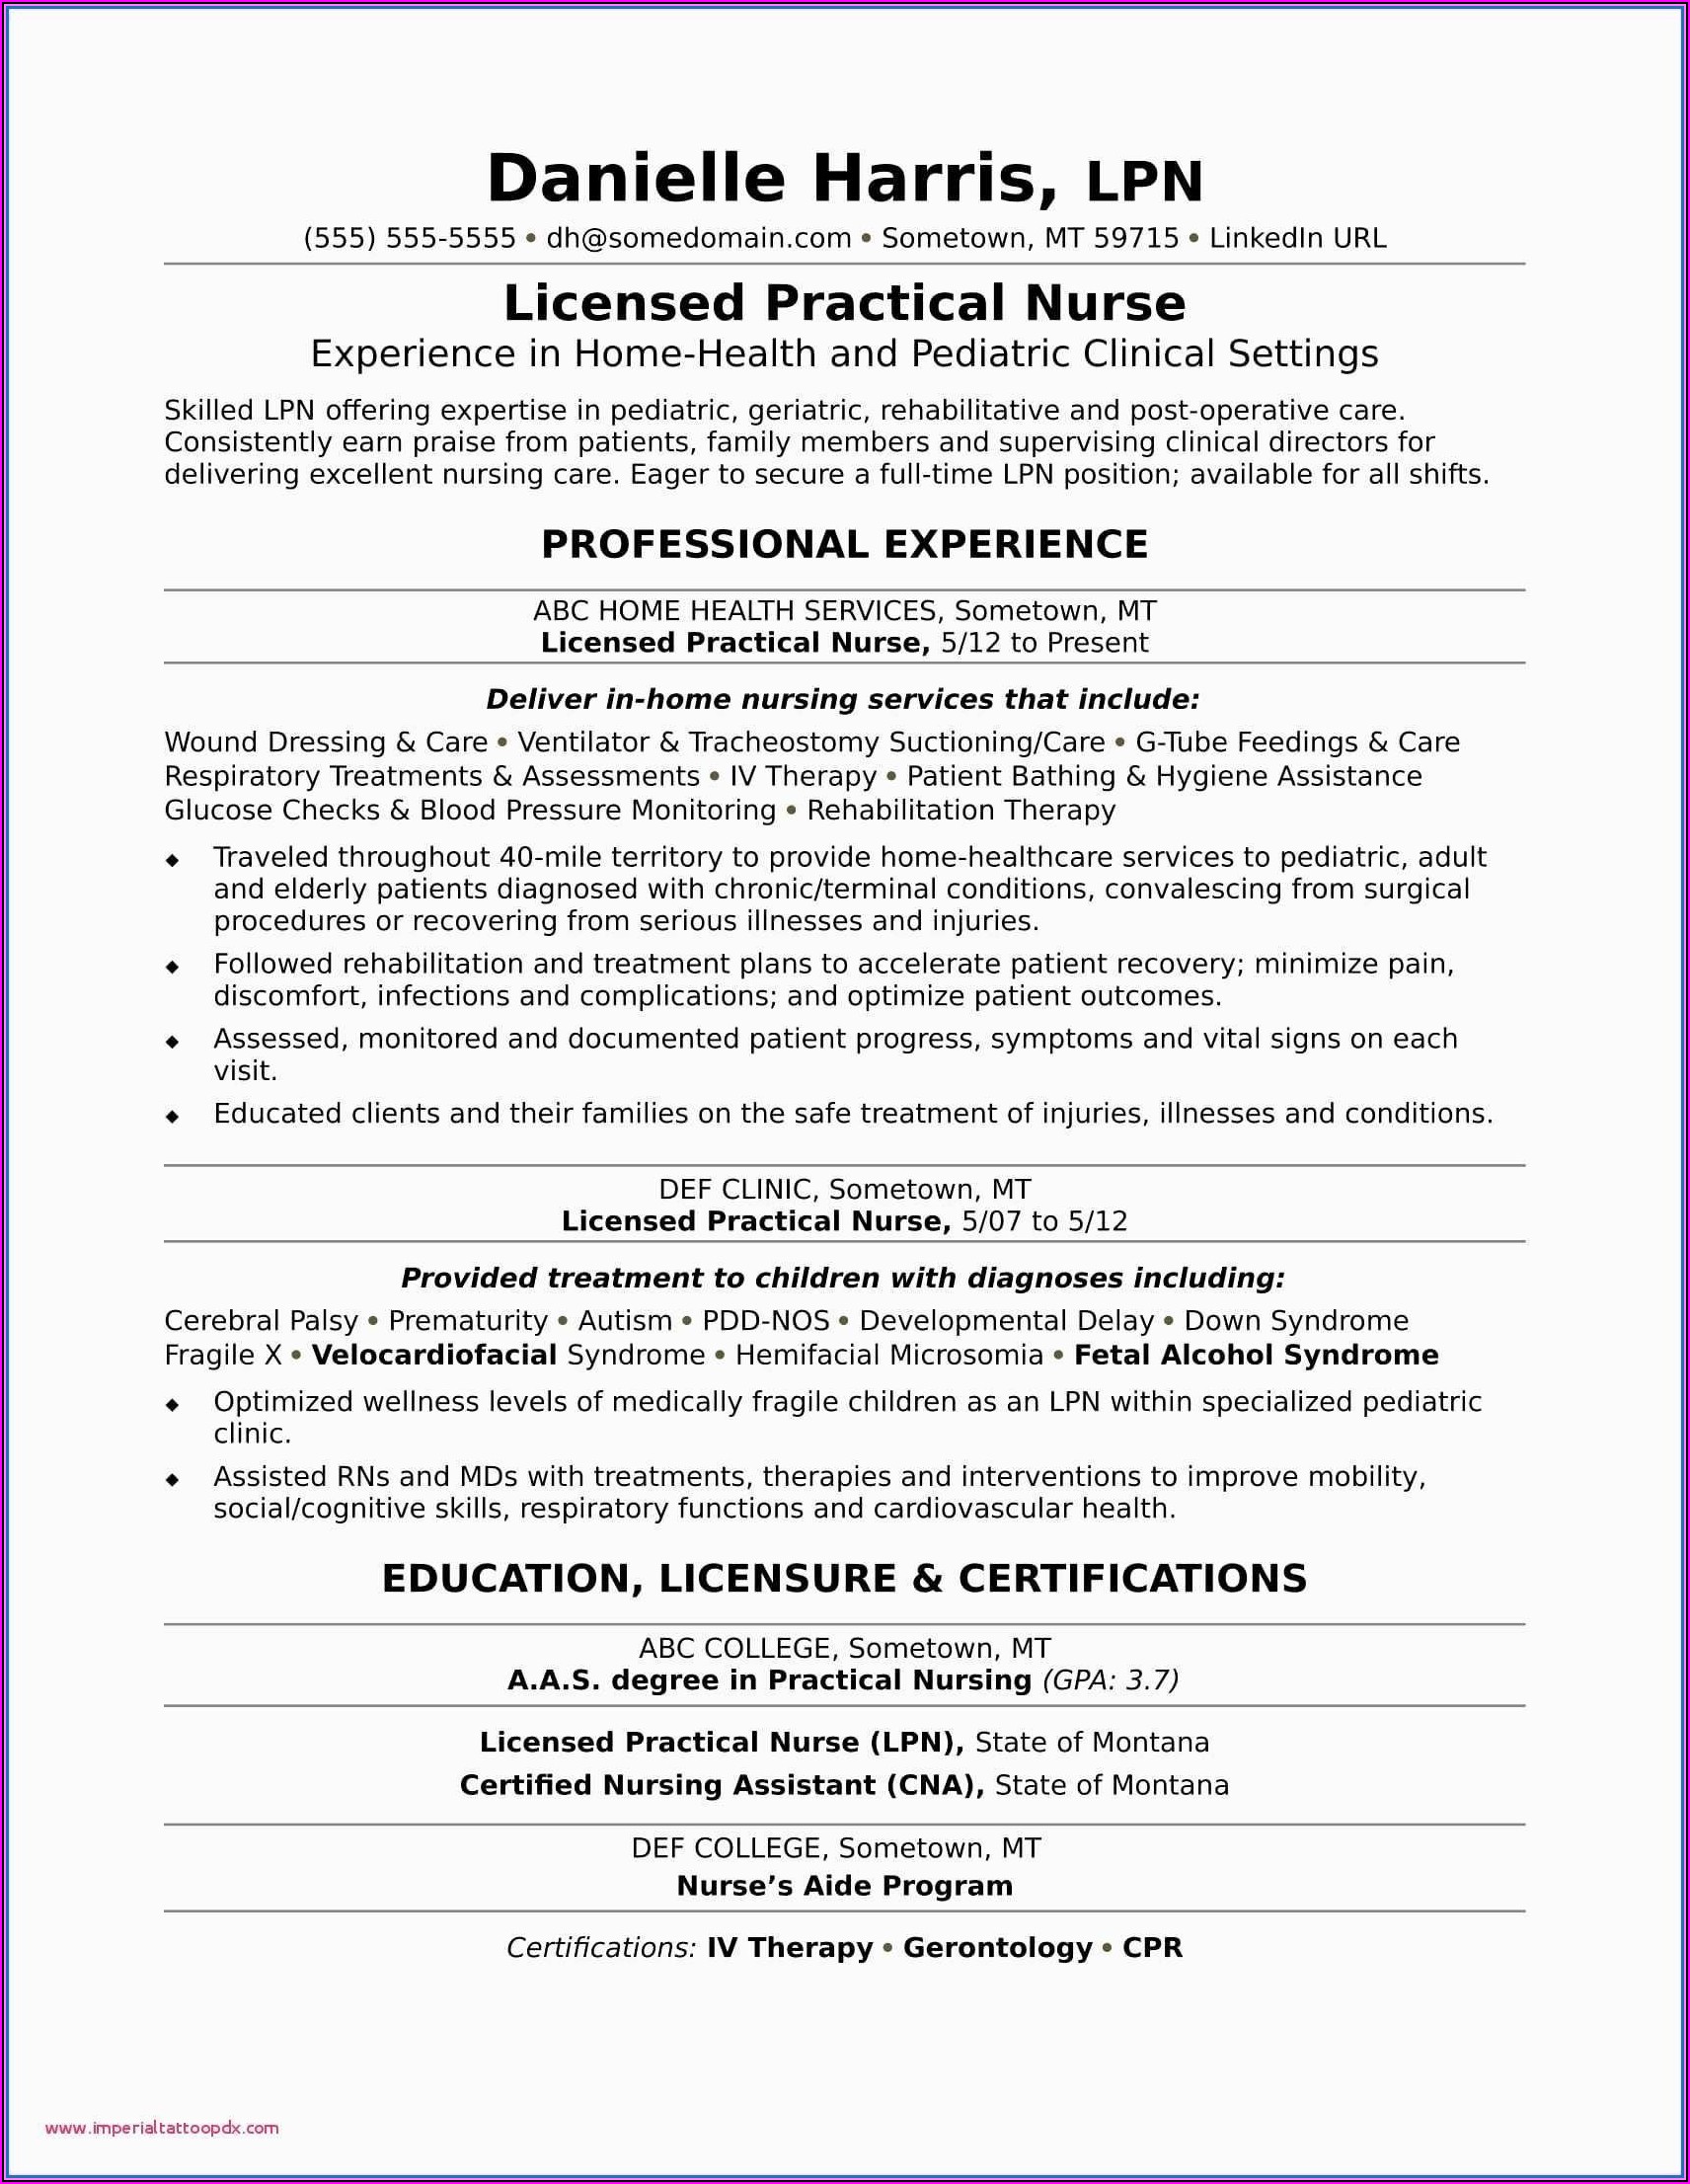 Nursing Assistant Customer Service Resume